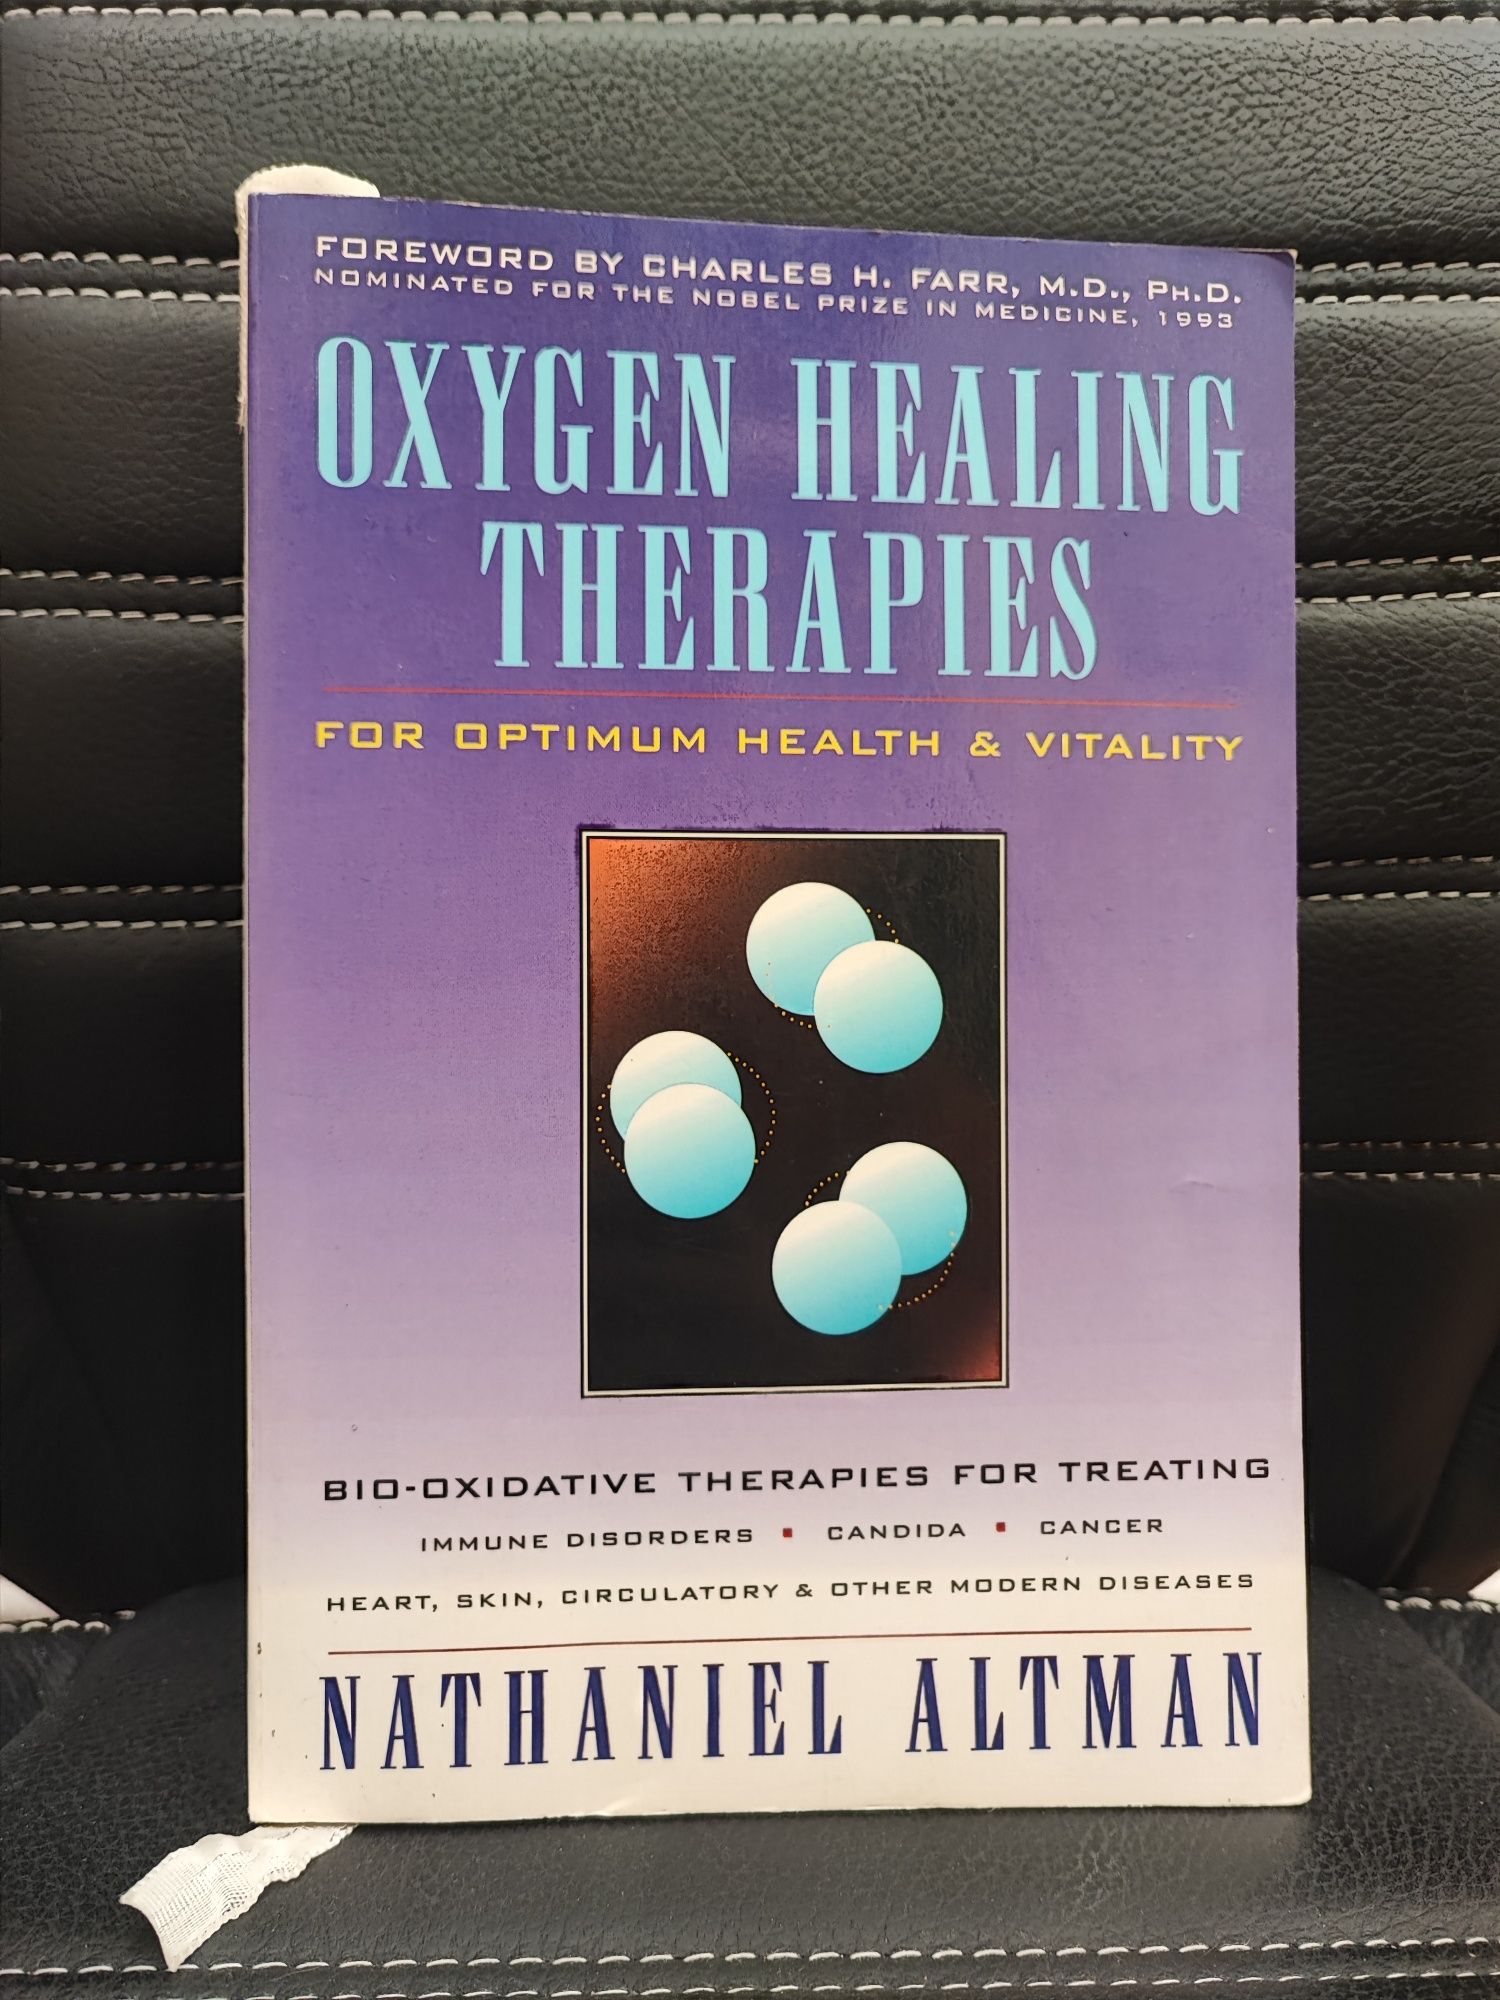 Oxygen healing therapies